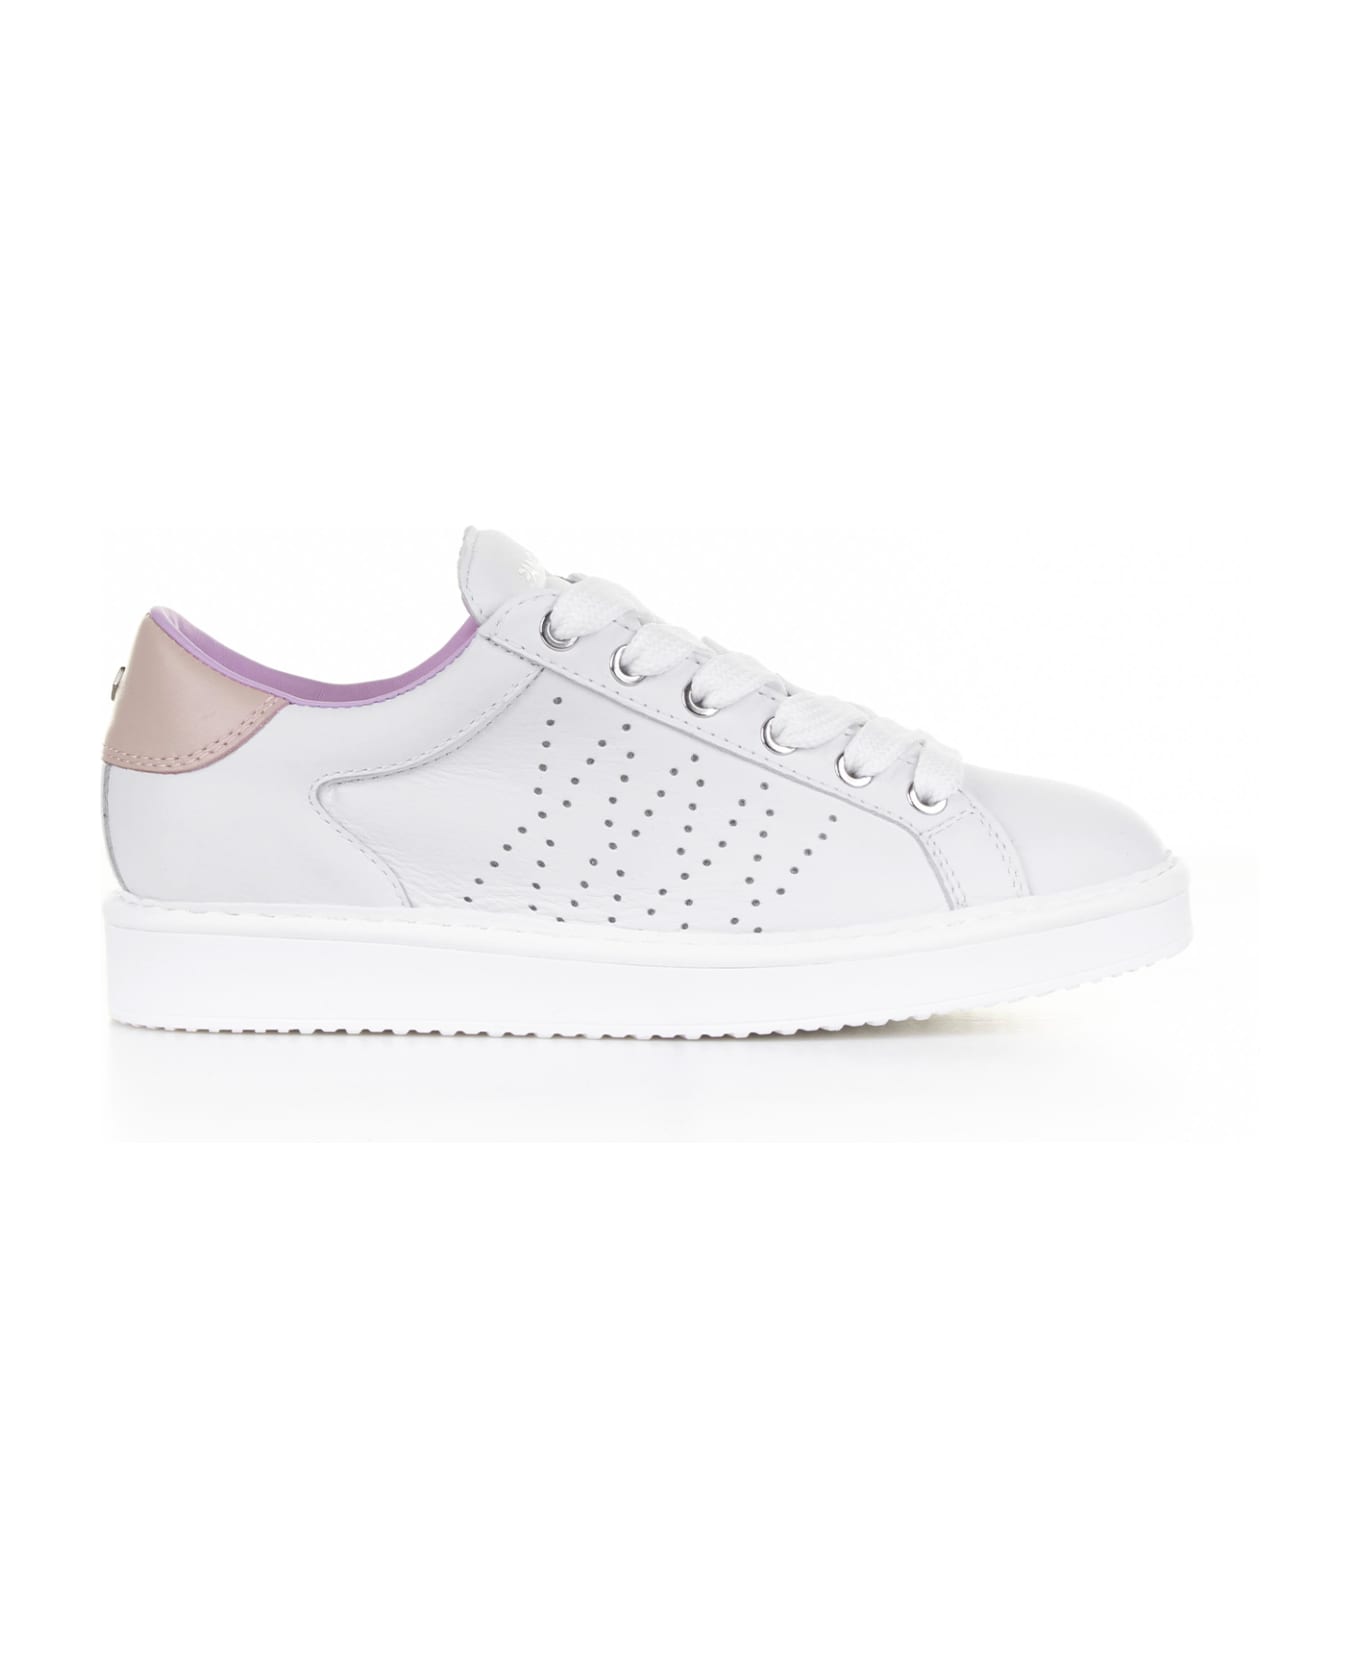 Panchic White Leather Sneaker And Pink Heel - WHITE-POWDER PINK